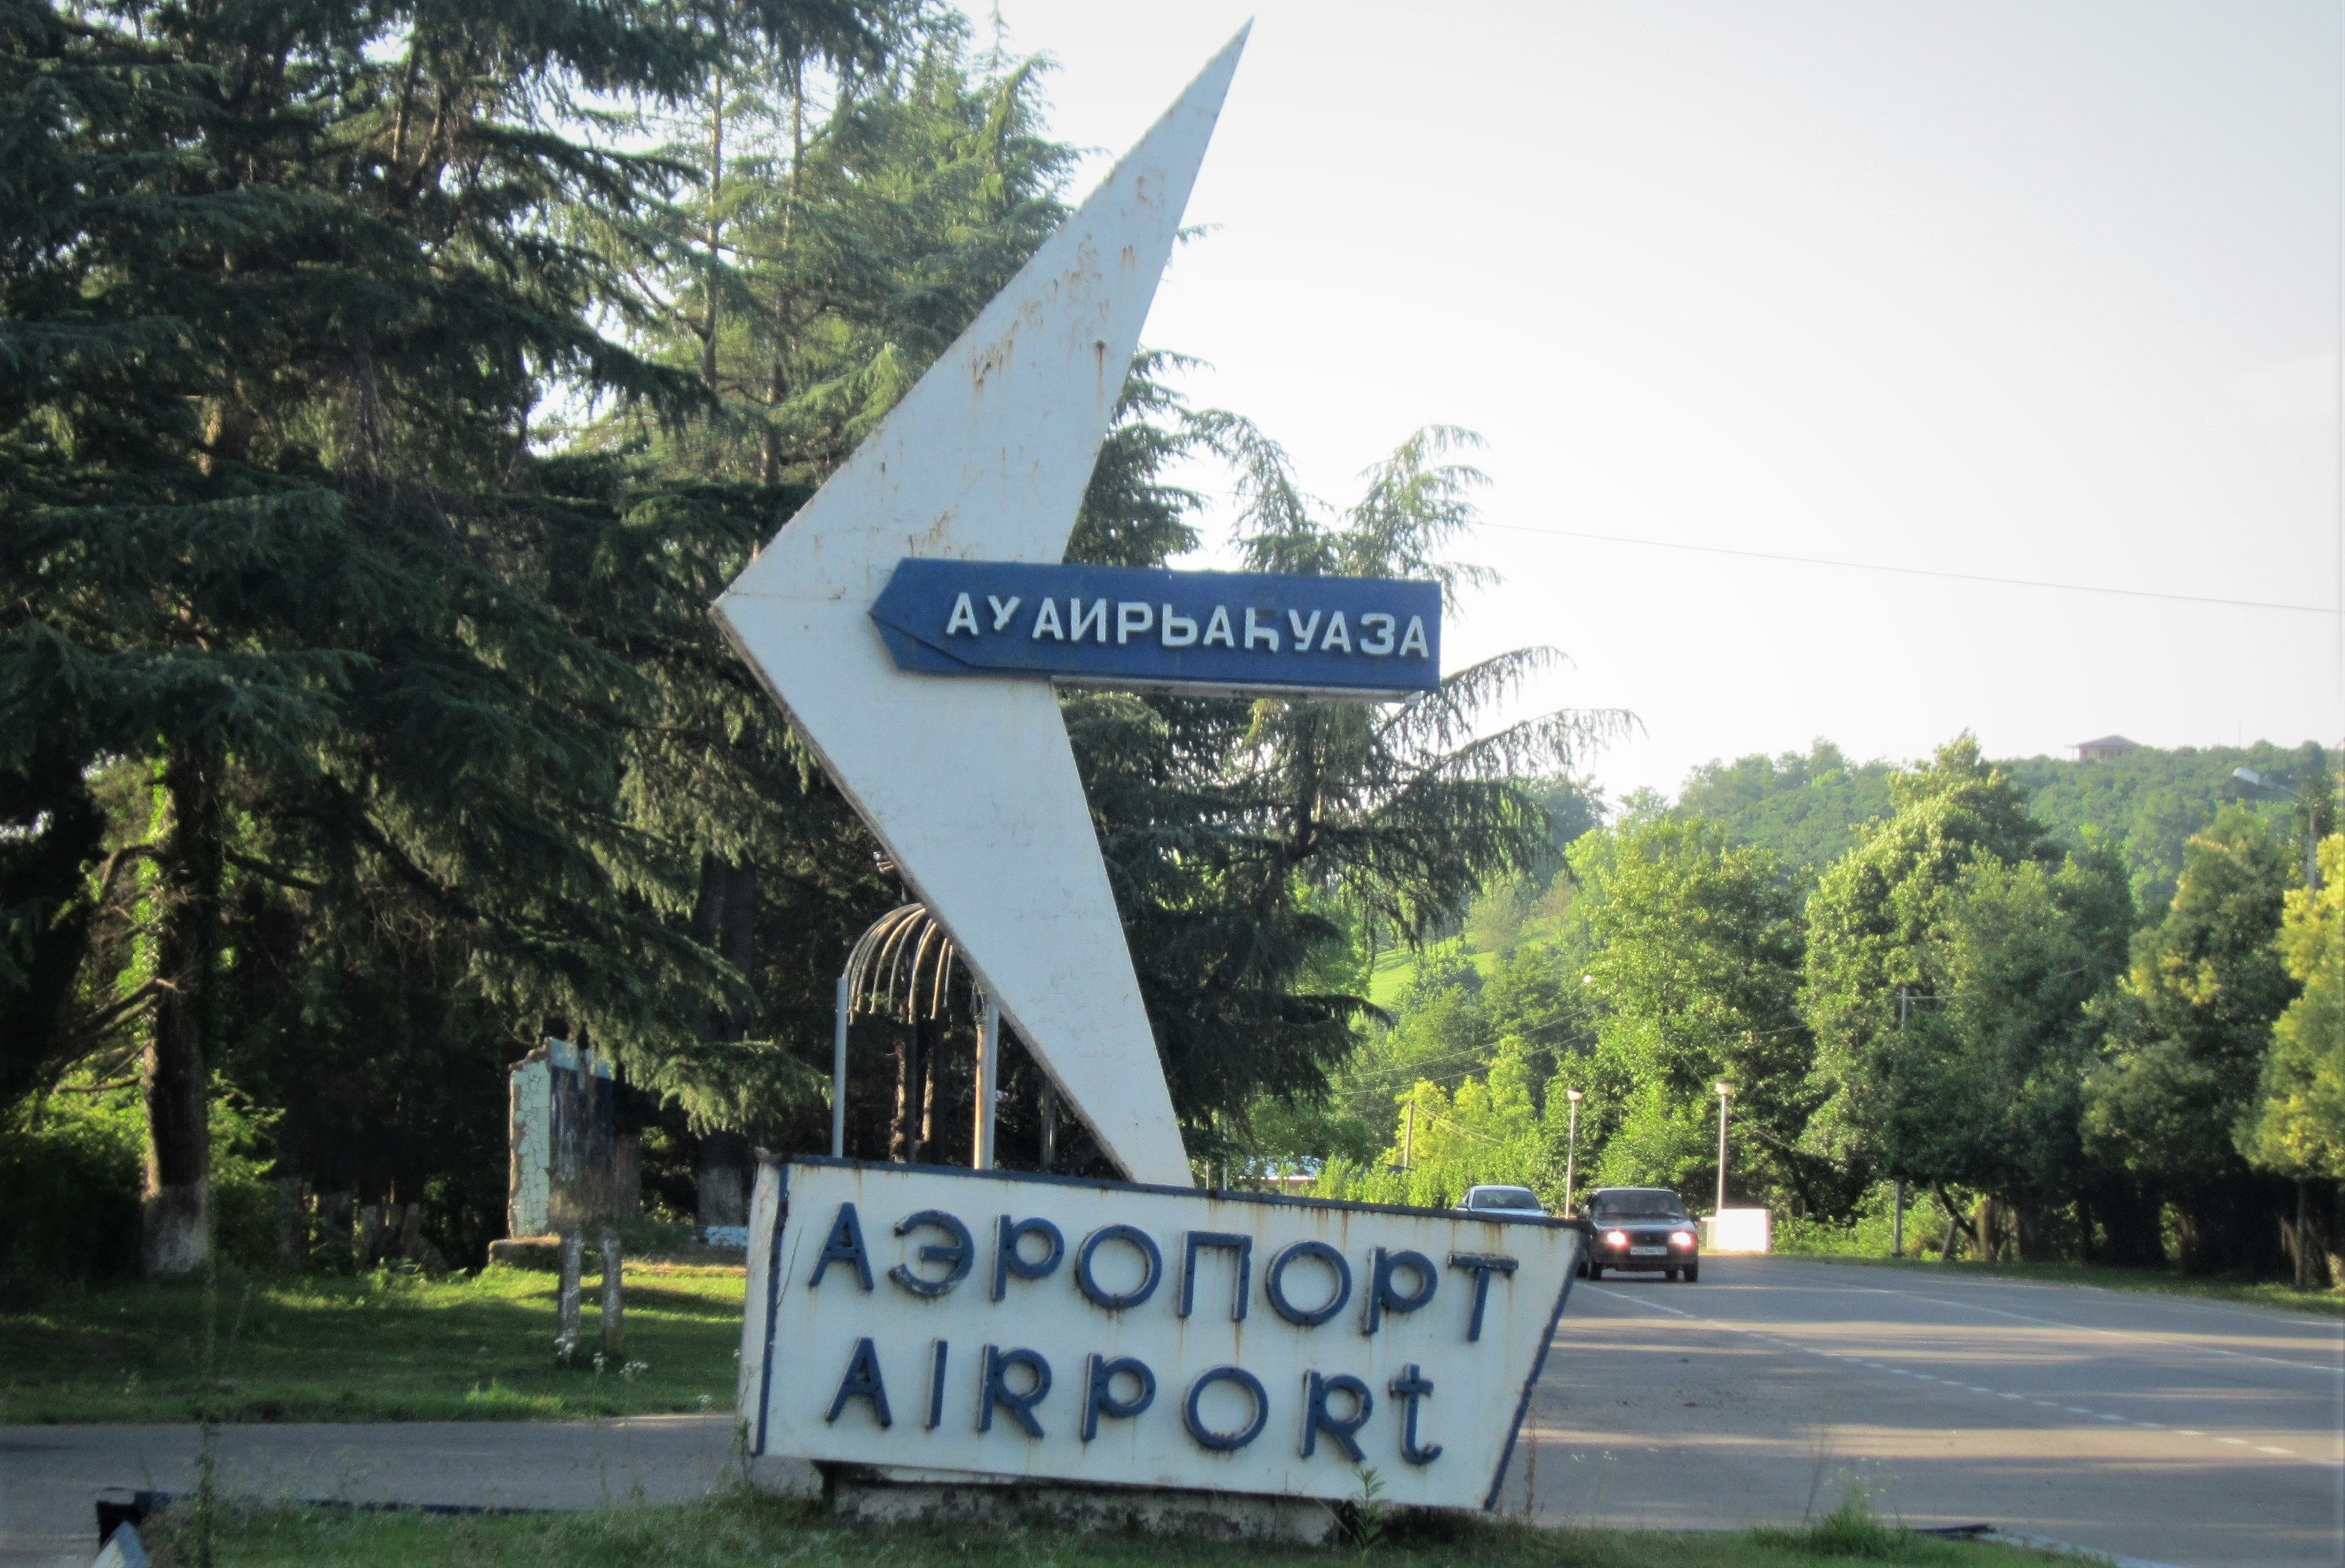 Sukhumi Airport АЭРОПОРТ АЭРОПОРТ